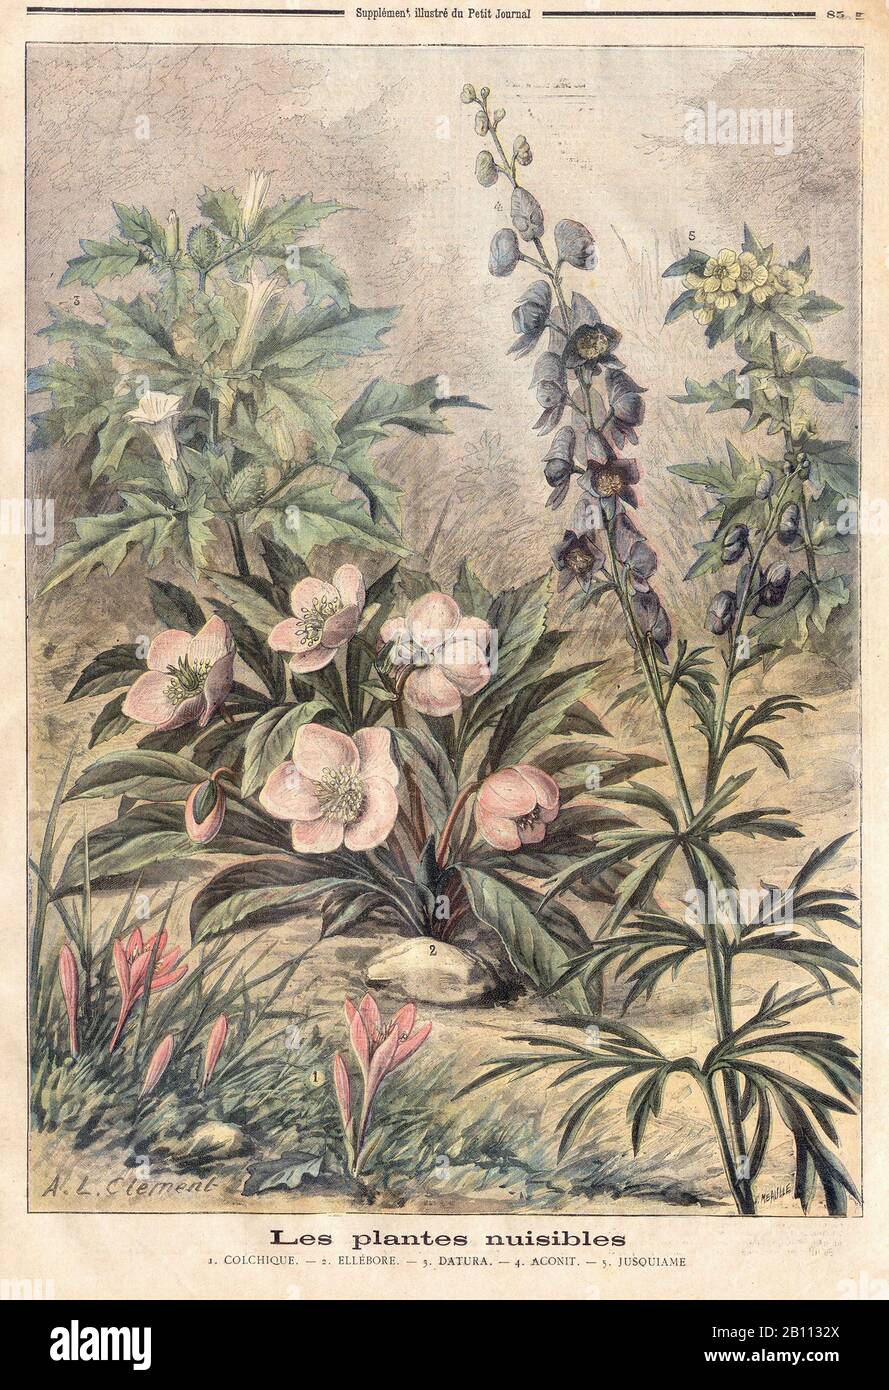 Les plantes nuisibles J. COLCHIQUE. 2. ELLÉBORE. DATURA. 4. ACONIT. Jusquiame - In 'Le Petit Journal' French Illustrated Newspaper - Foto Stock